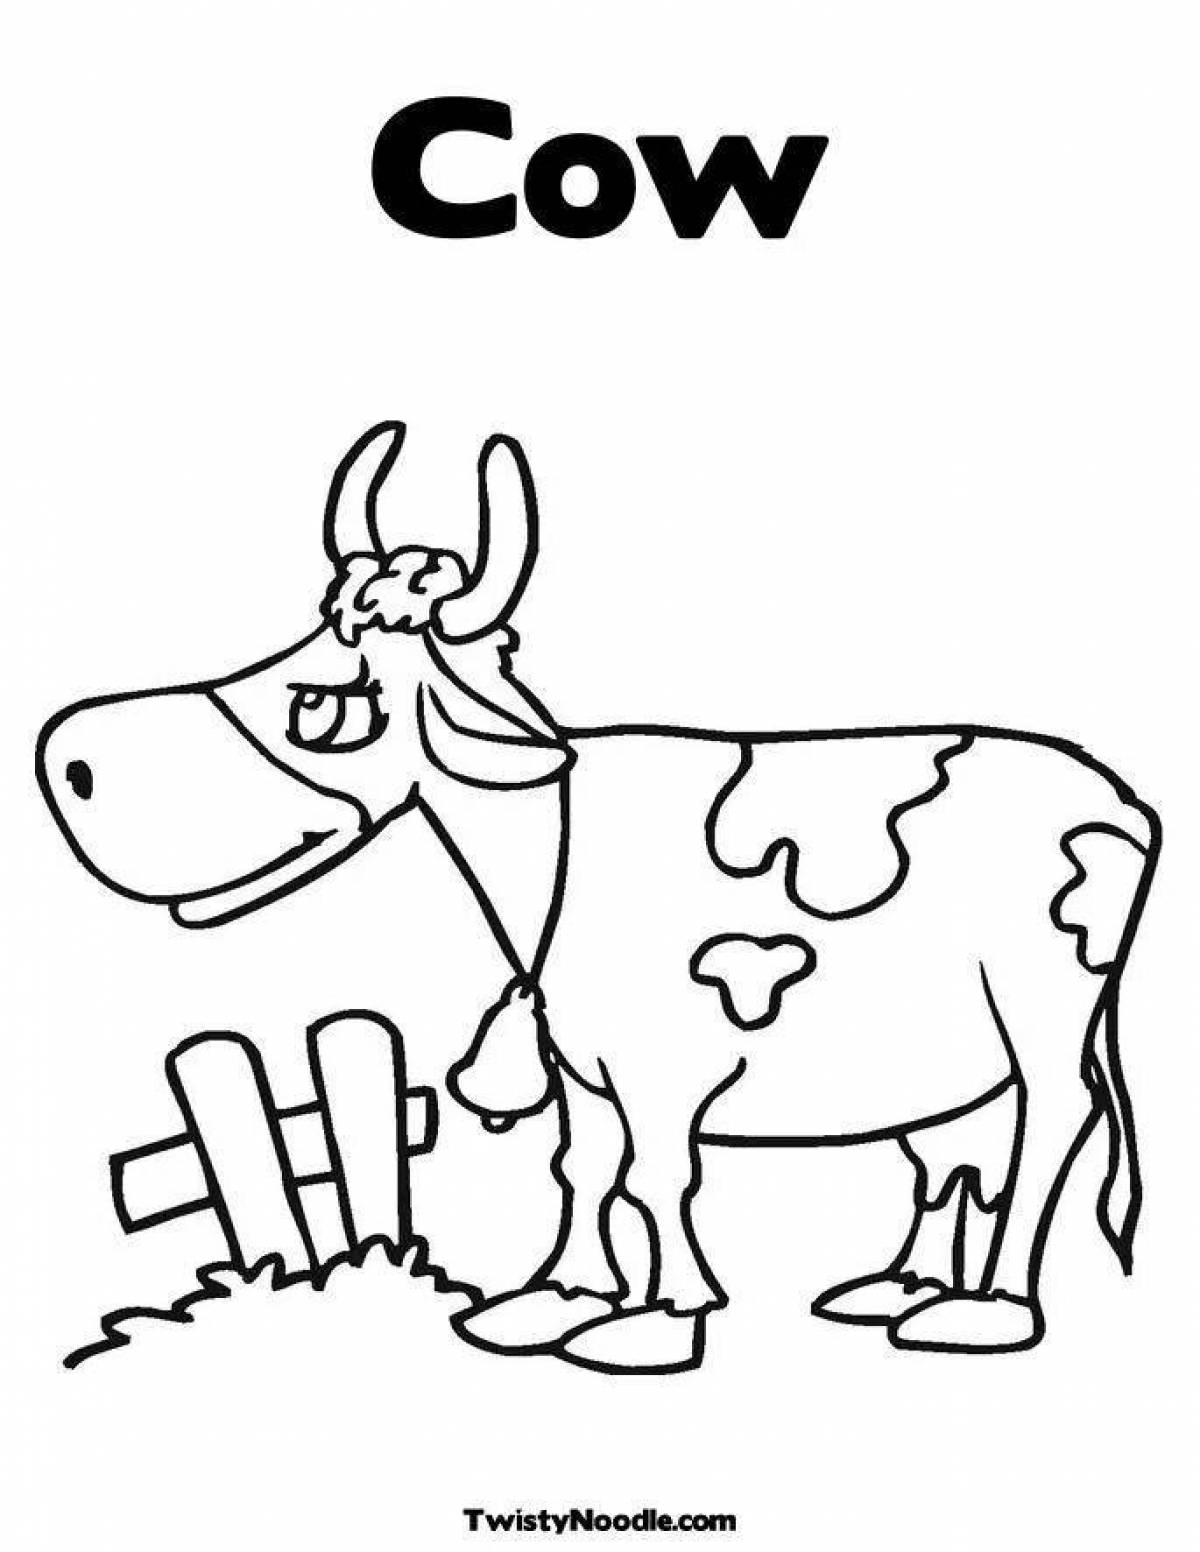 Cow#9